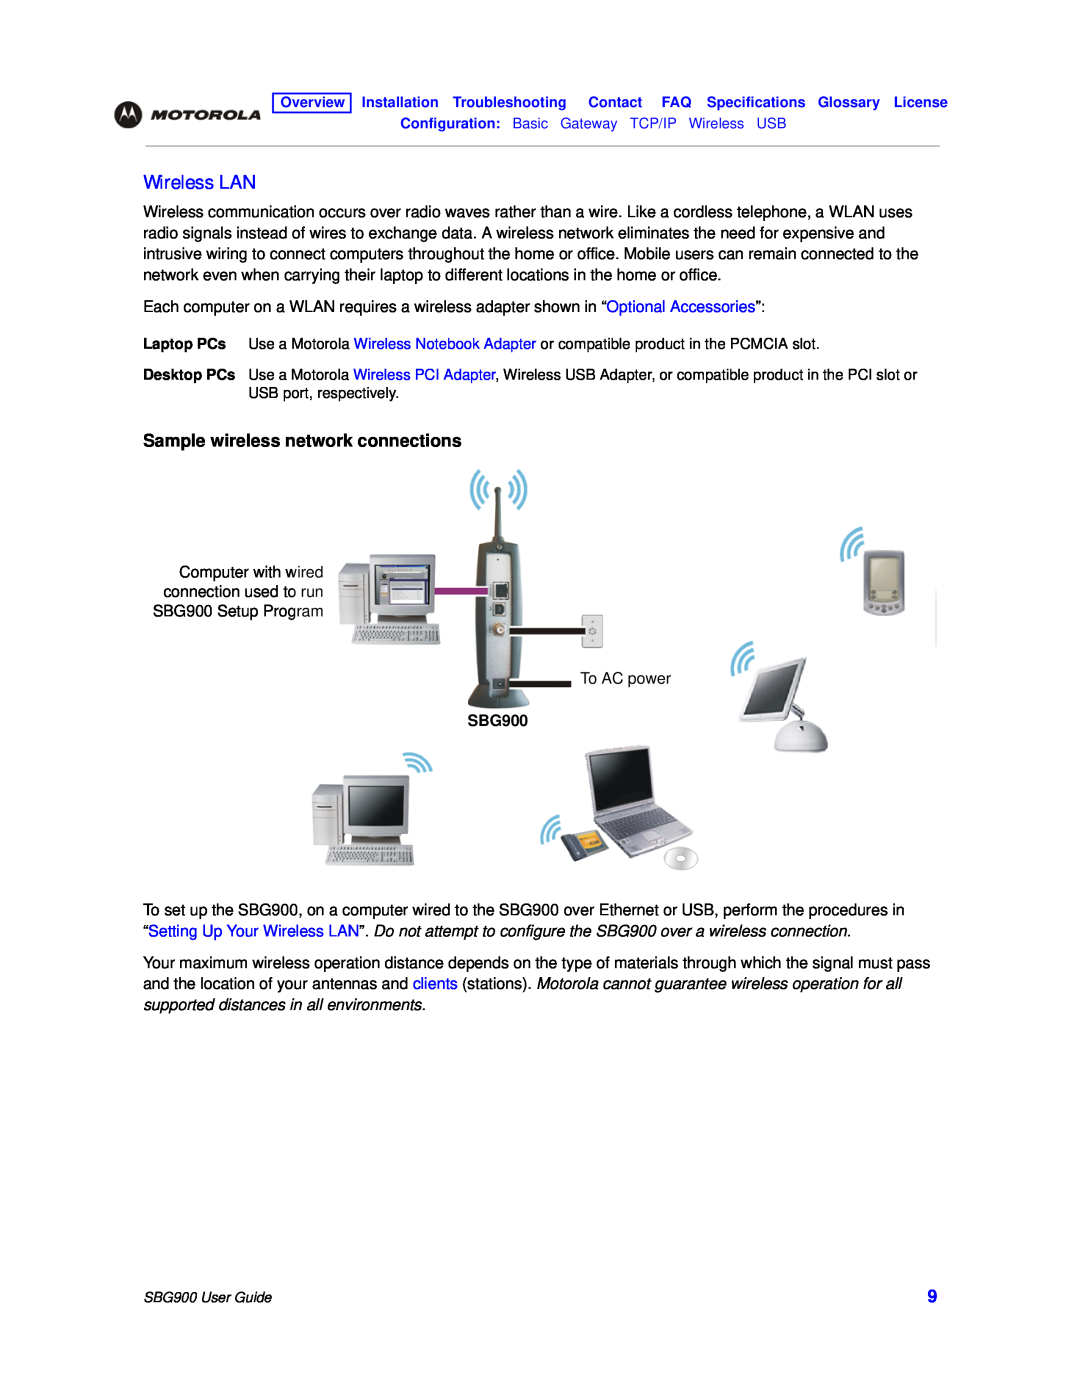 Motorola SBG900 manual Wireless LAN, Sample wireless network connections 